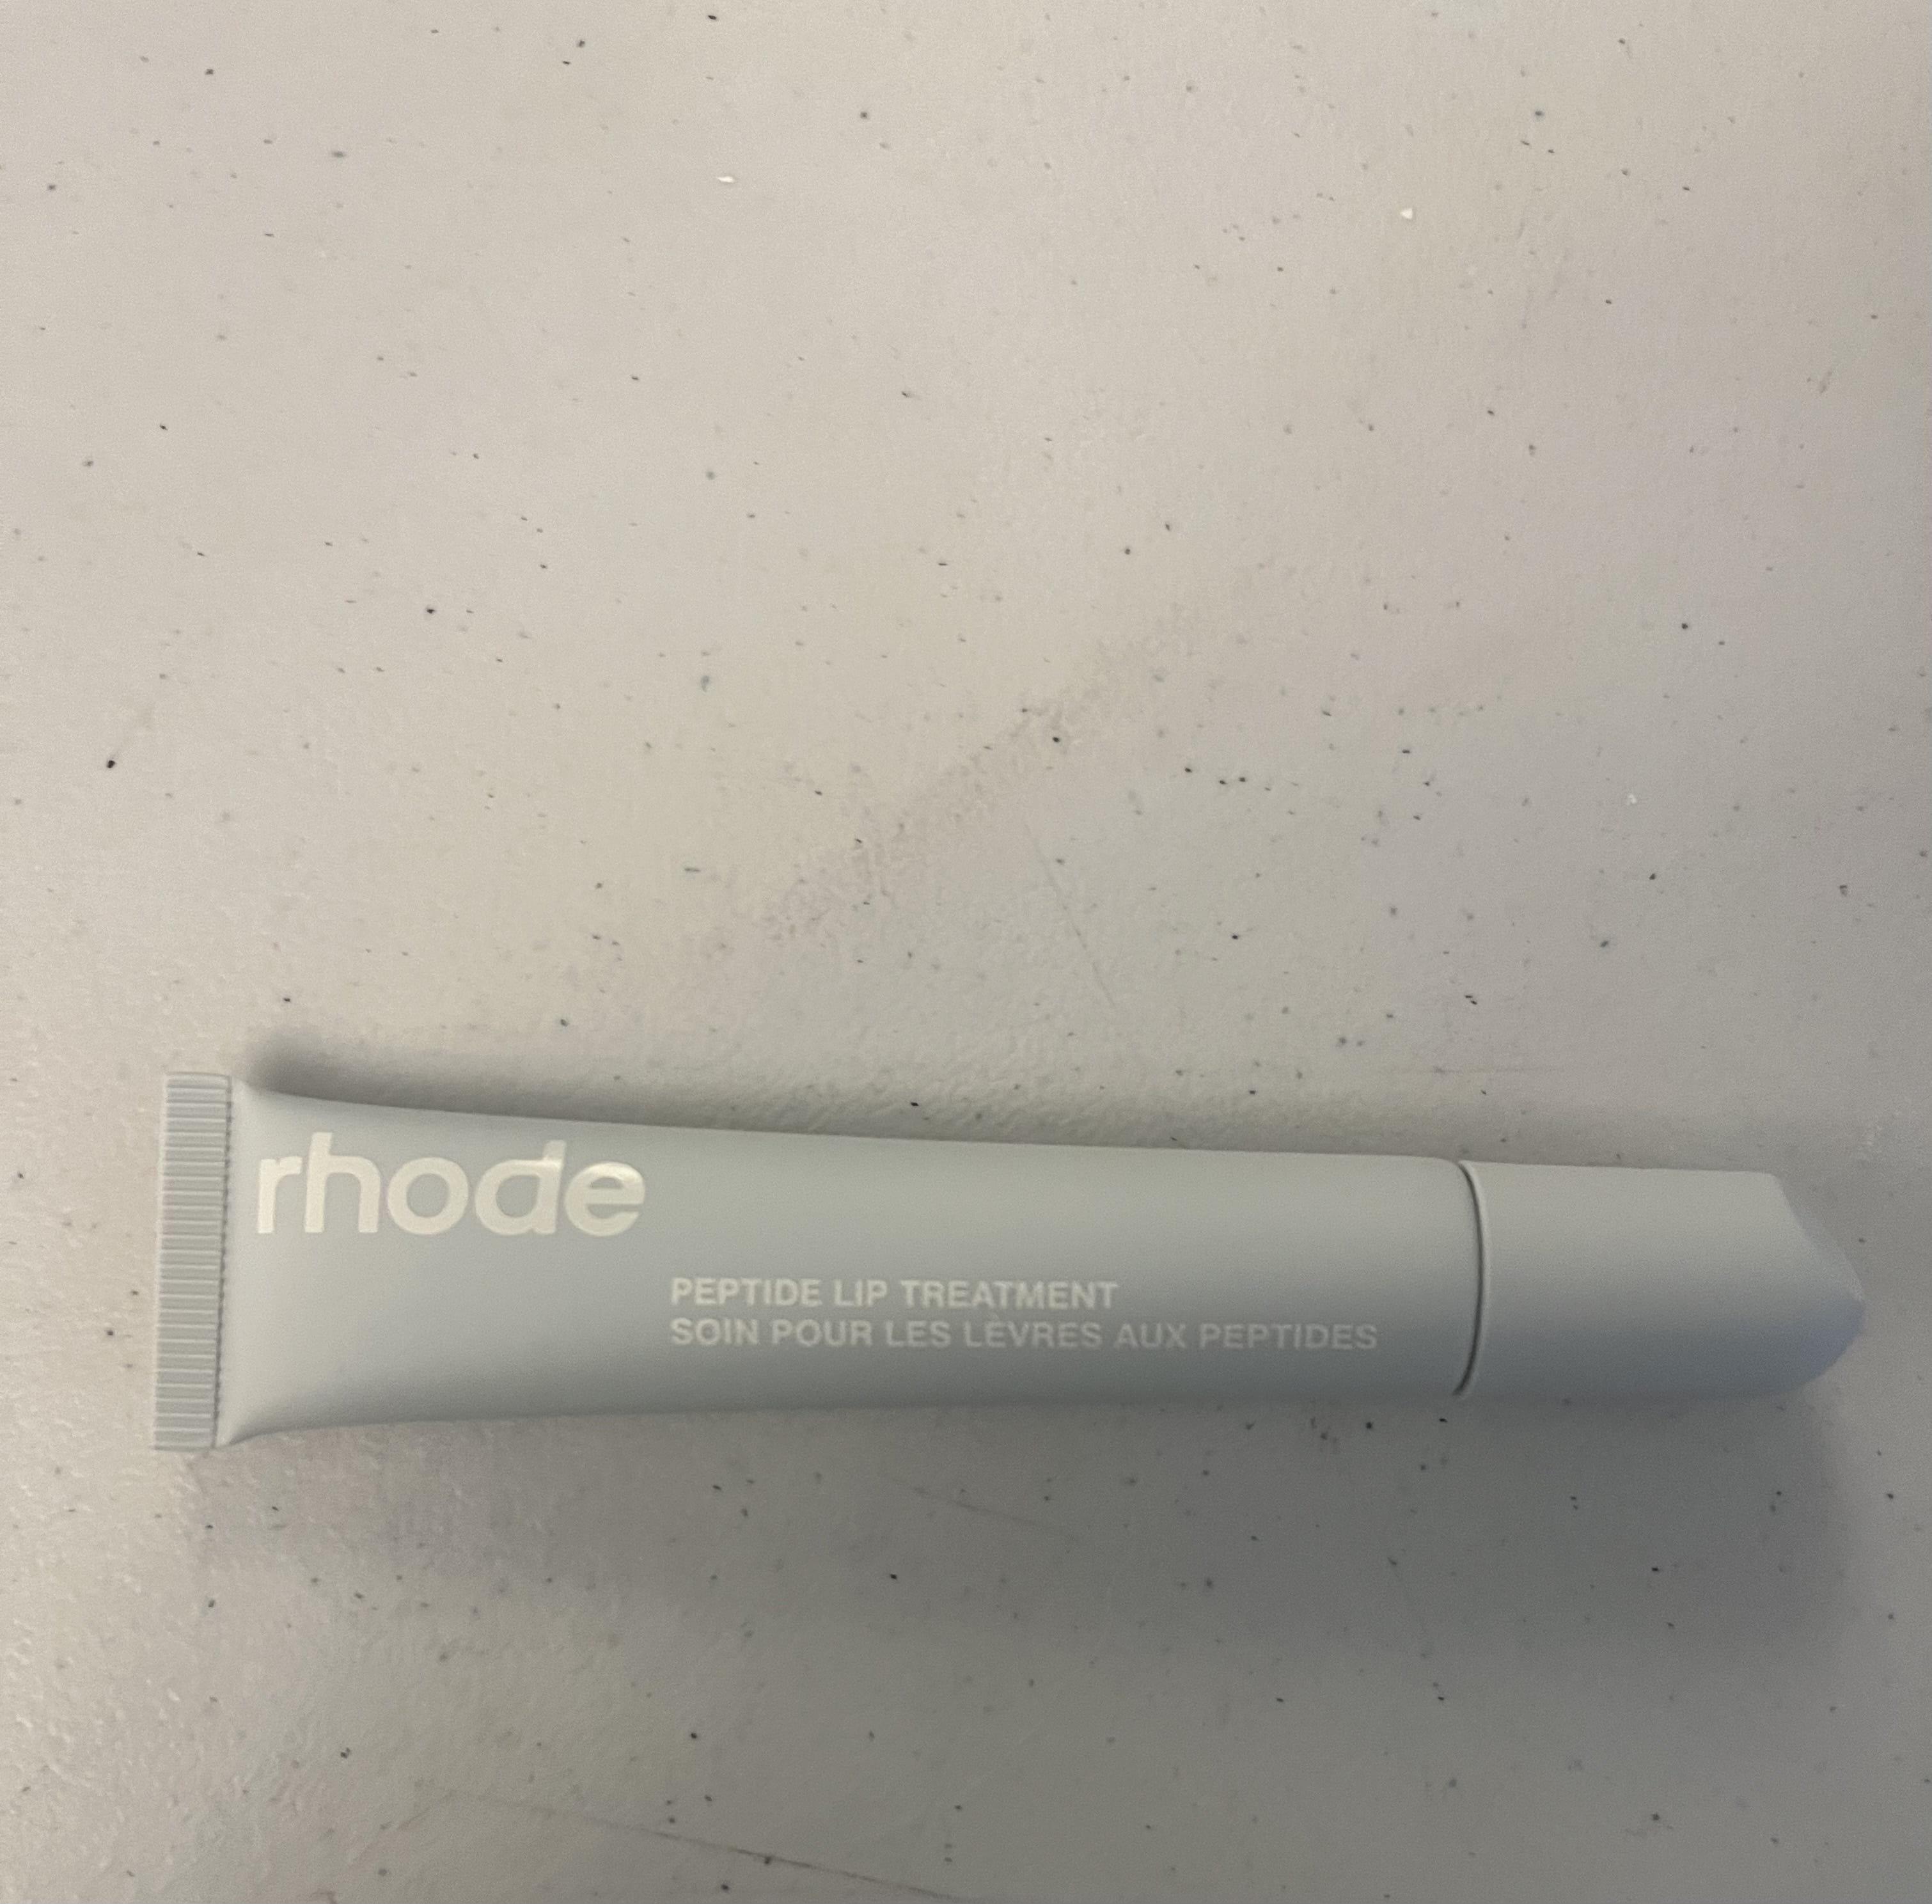 Rhode Peptide Lip Treatment Unscented